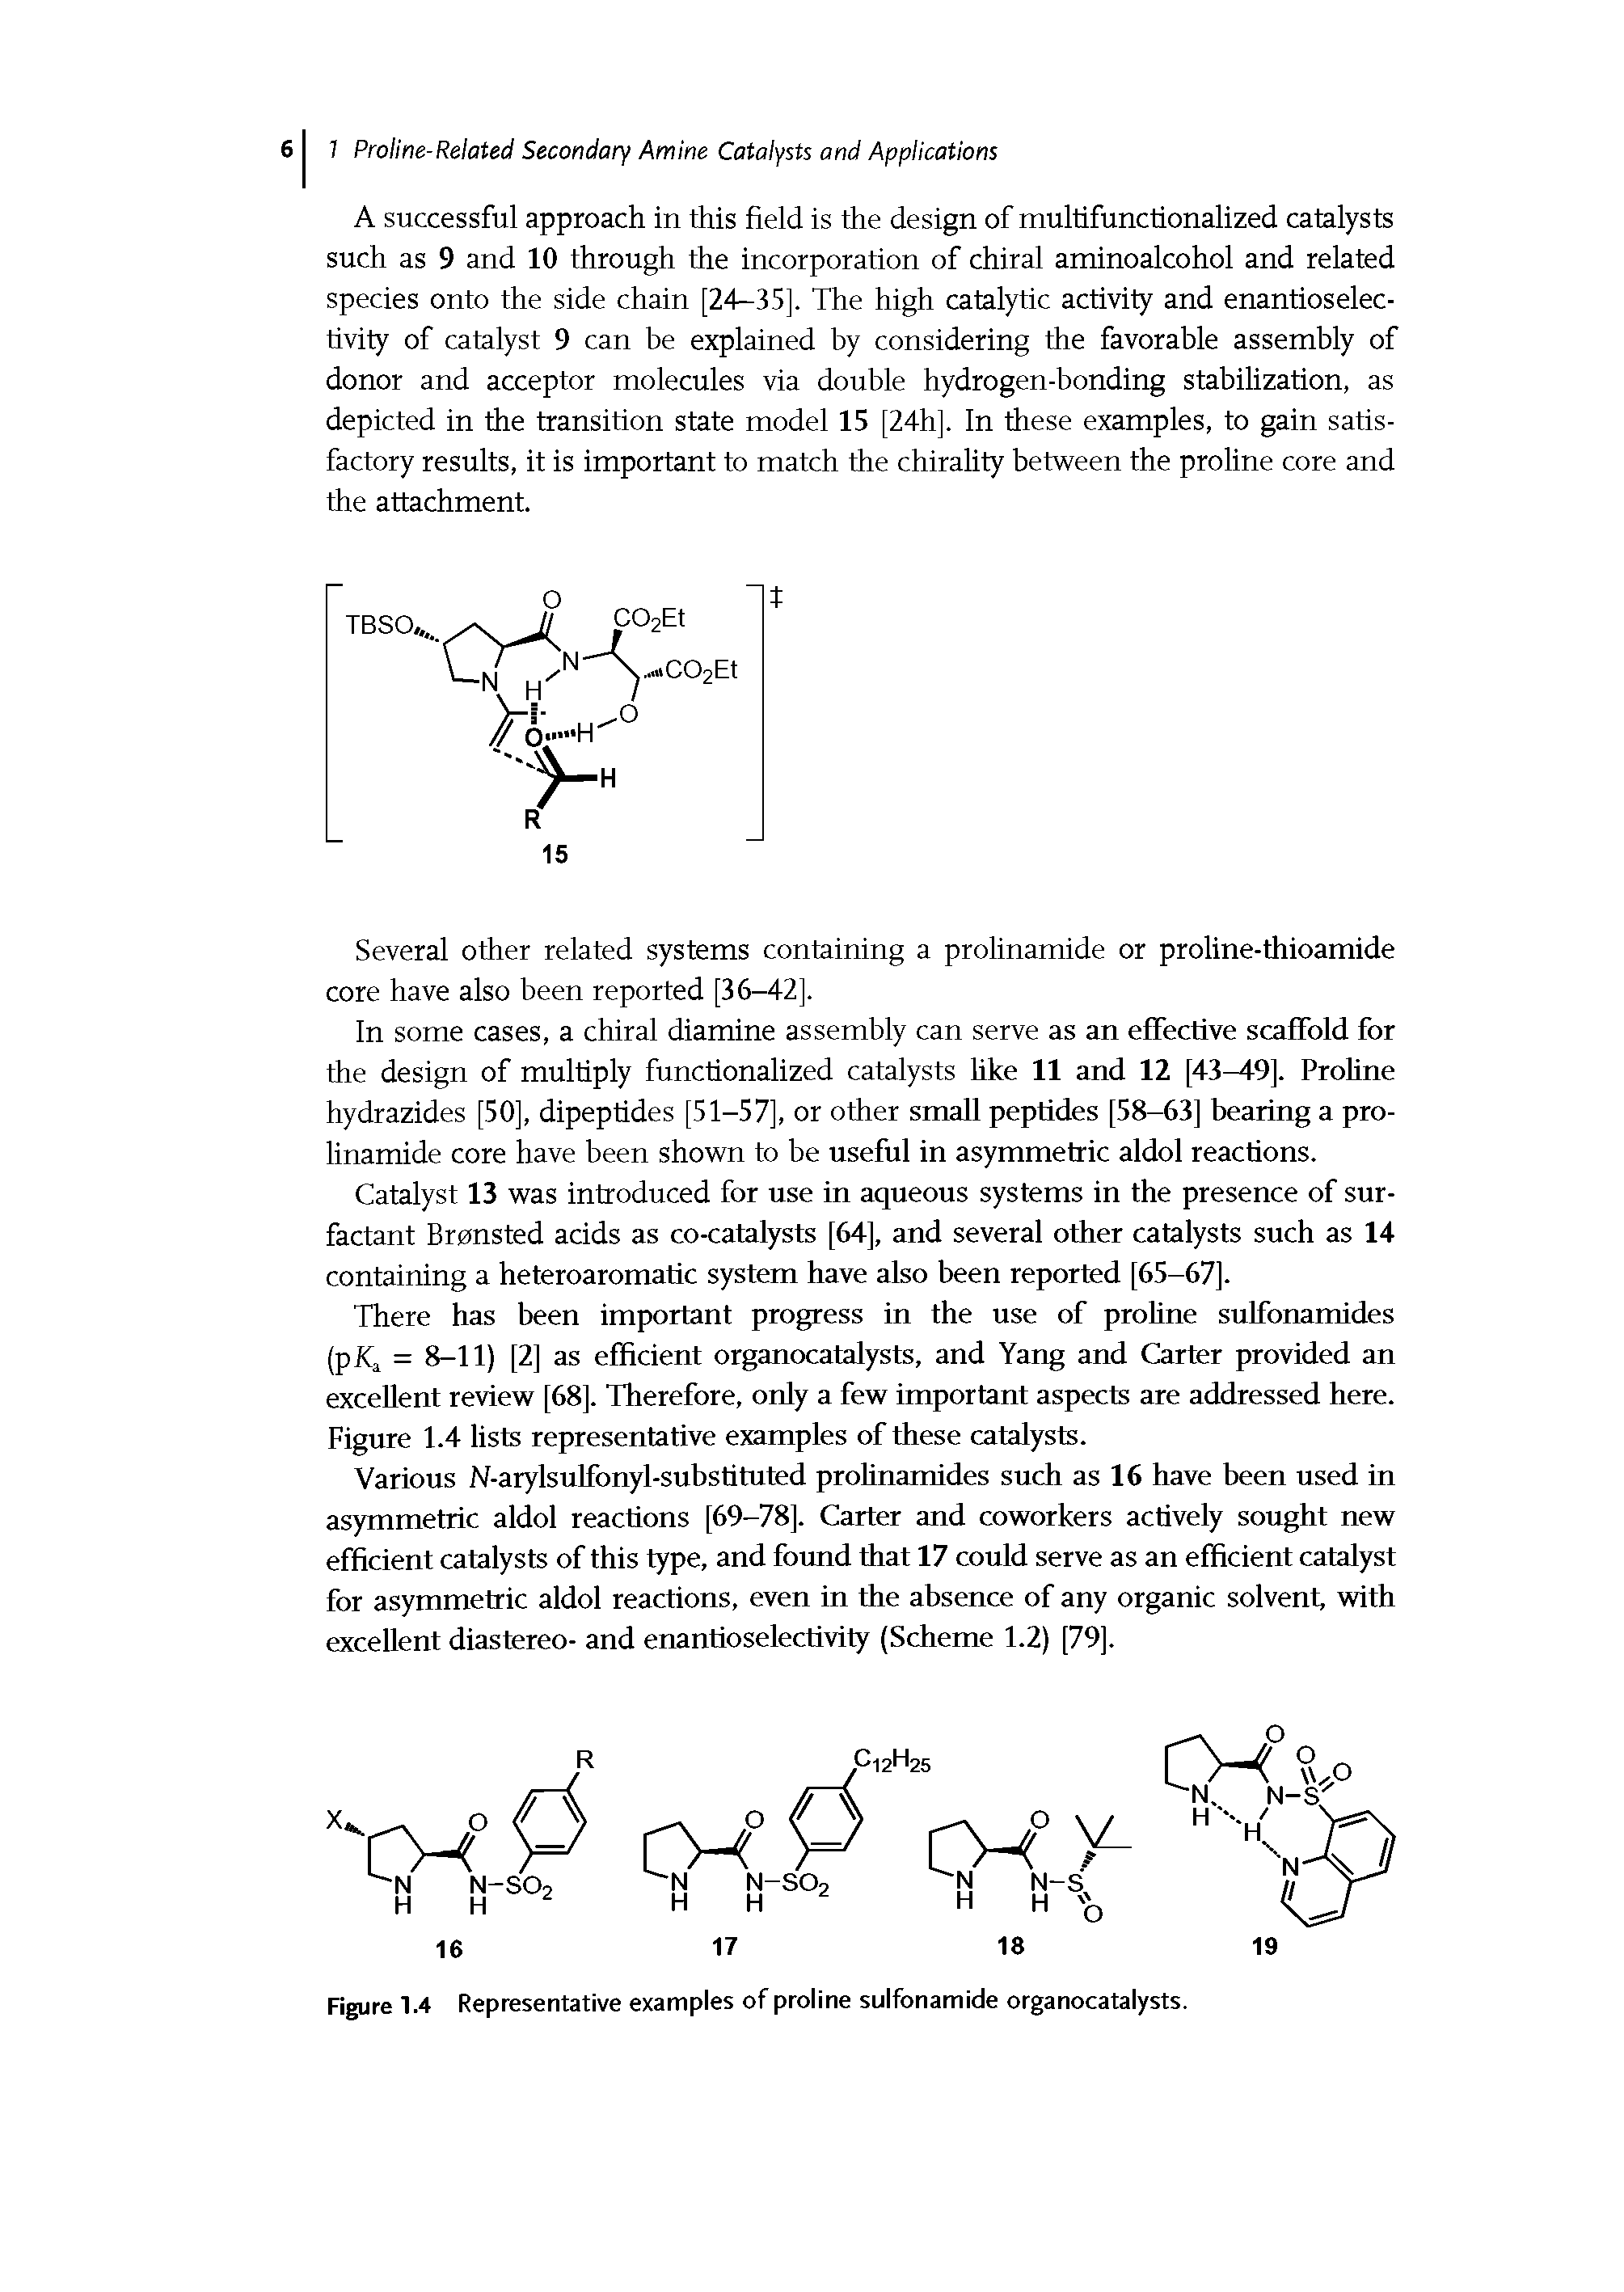 Figure 1.4 Representative examples of proline sulfonamide organocatalysts.